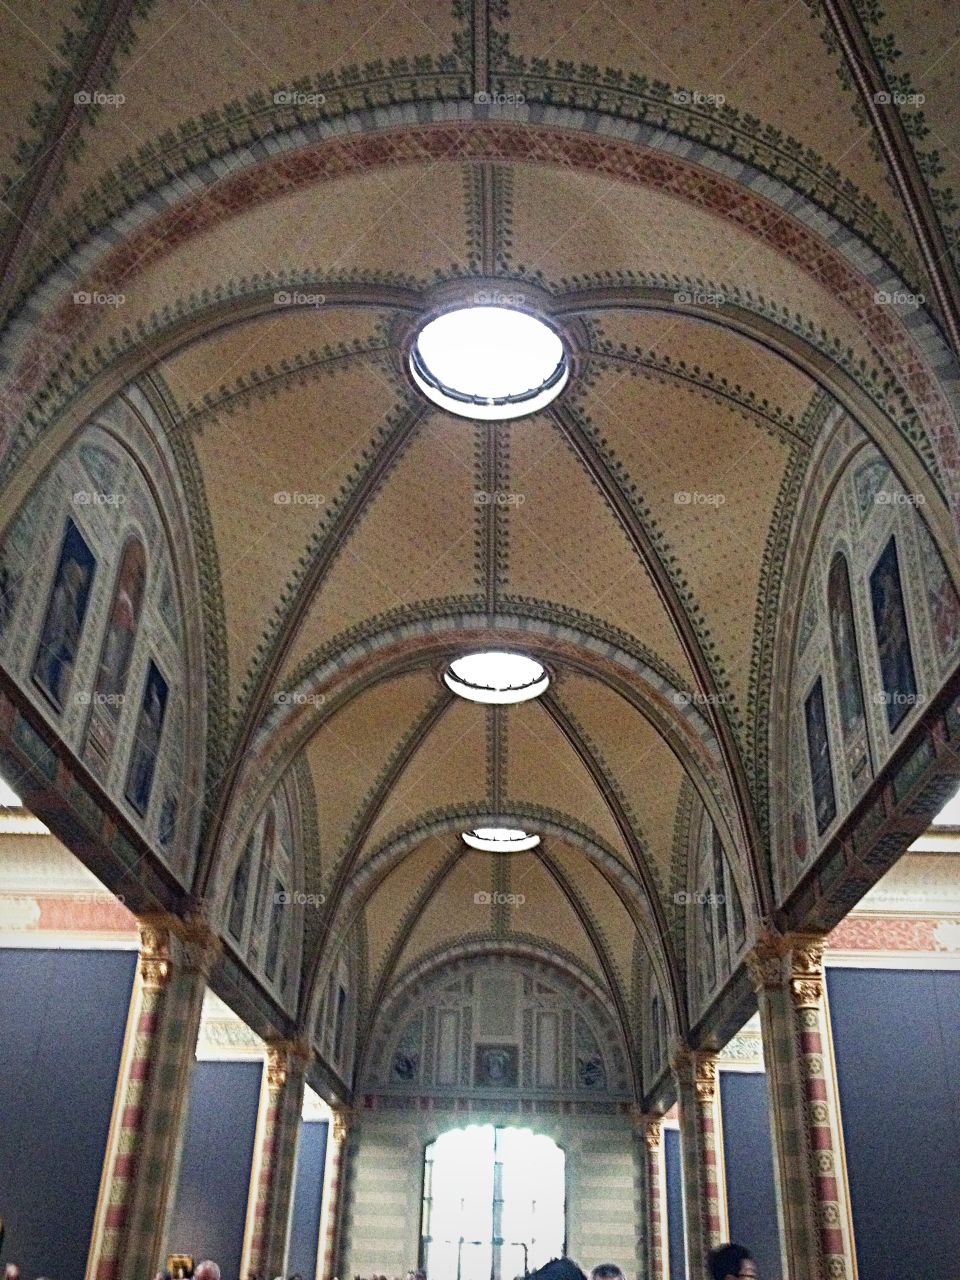 Gorgeous ceiling in the Rijksmuseum, Amsterdam 